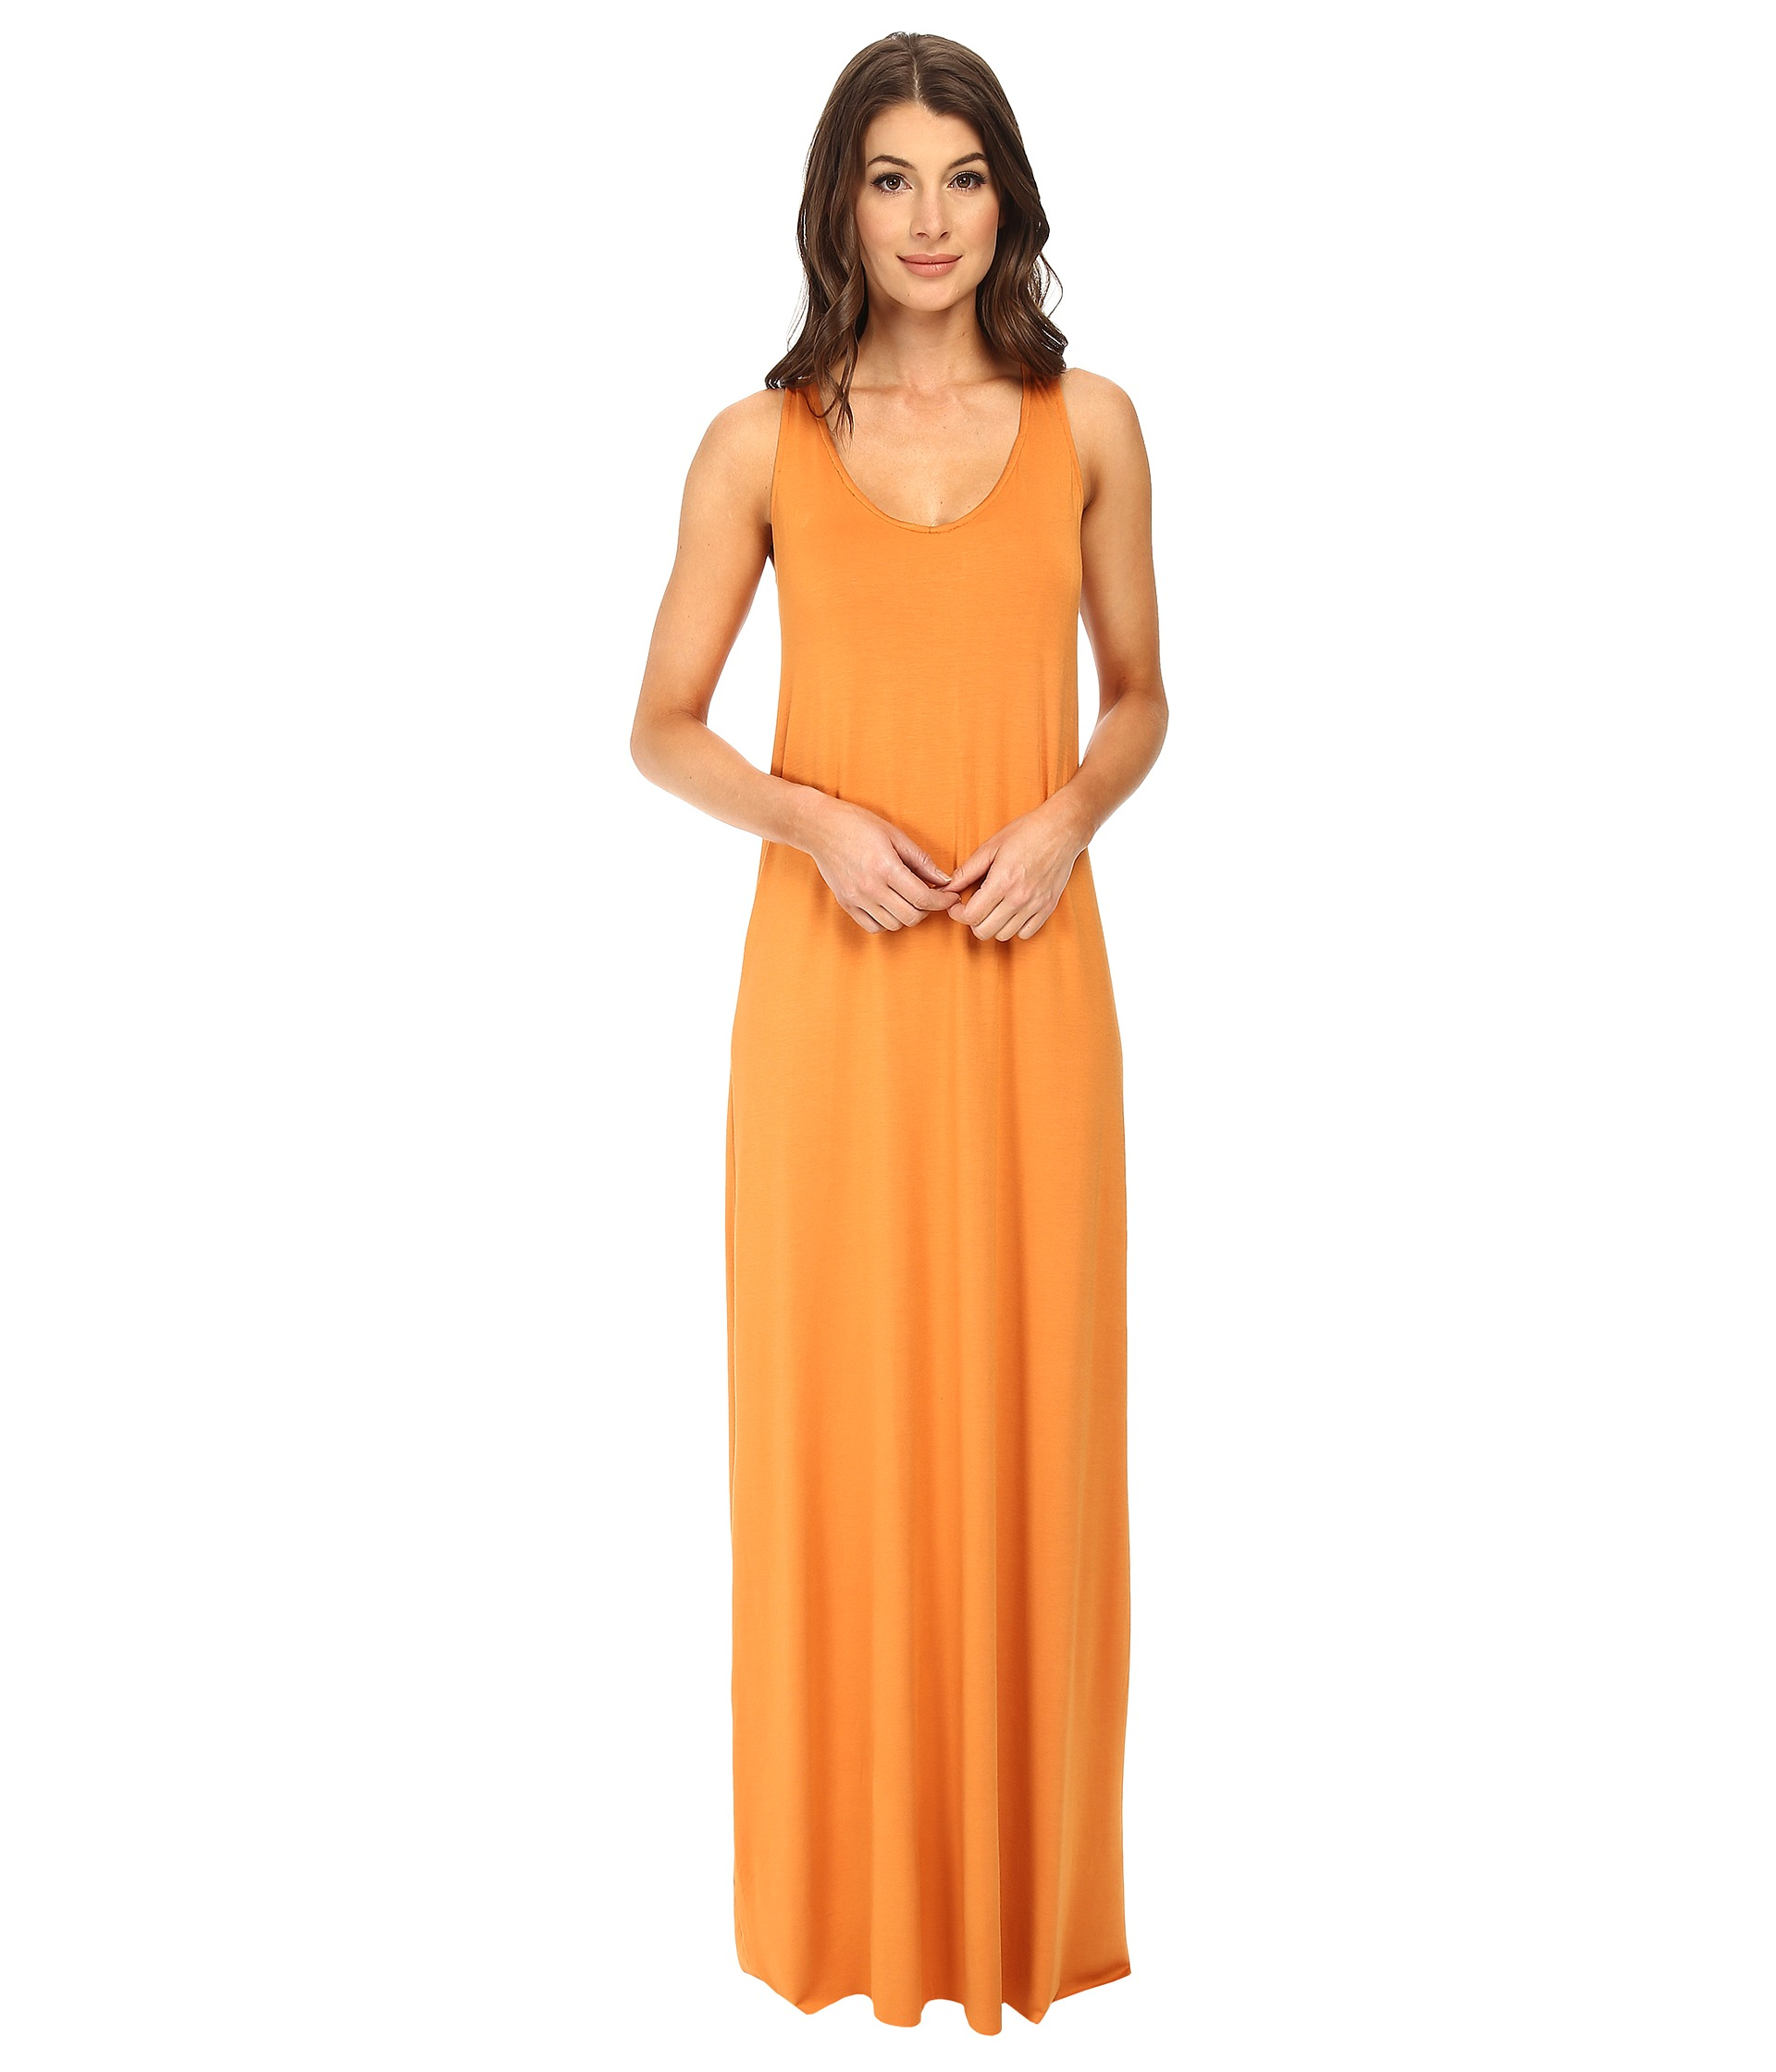 Lyst - Rachel Pally Xena Dress in Orange